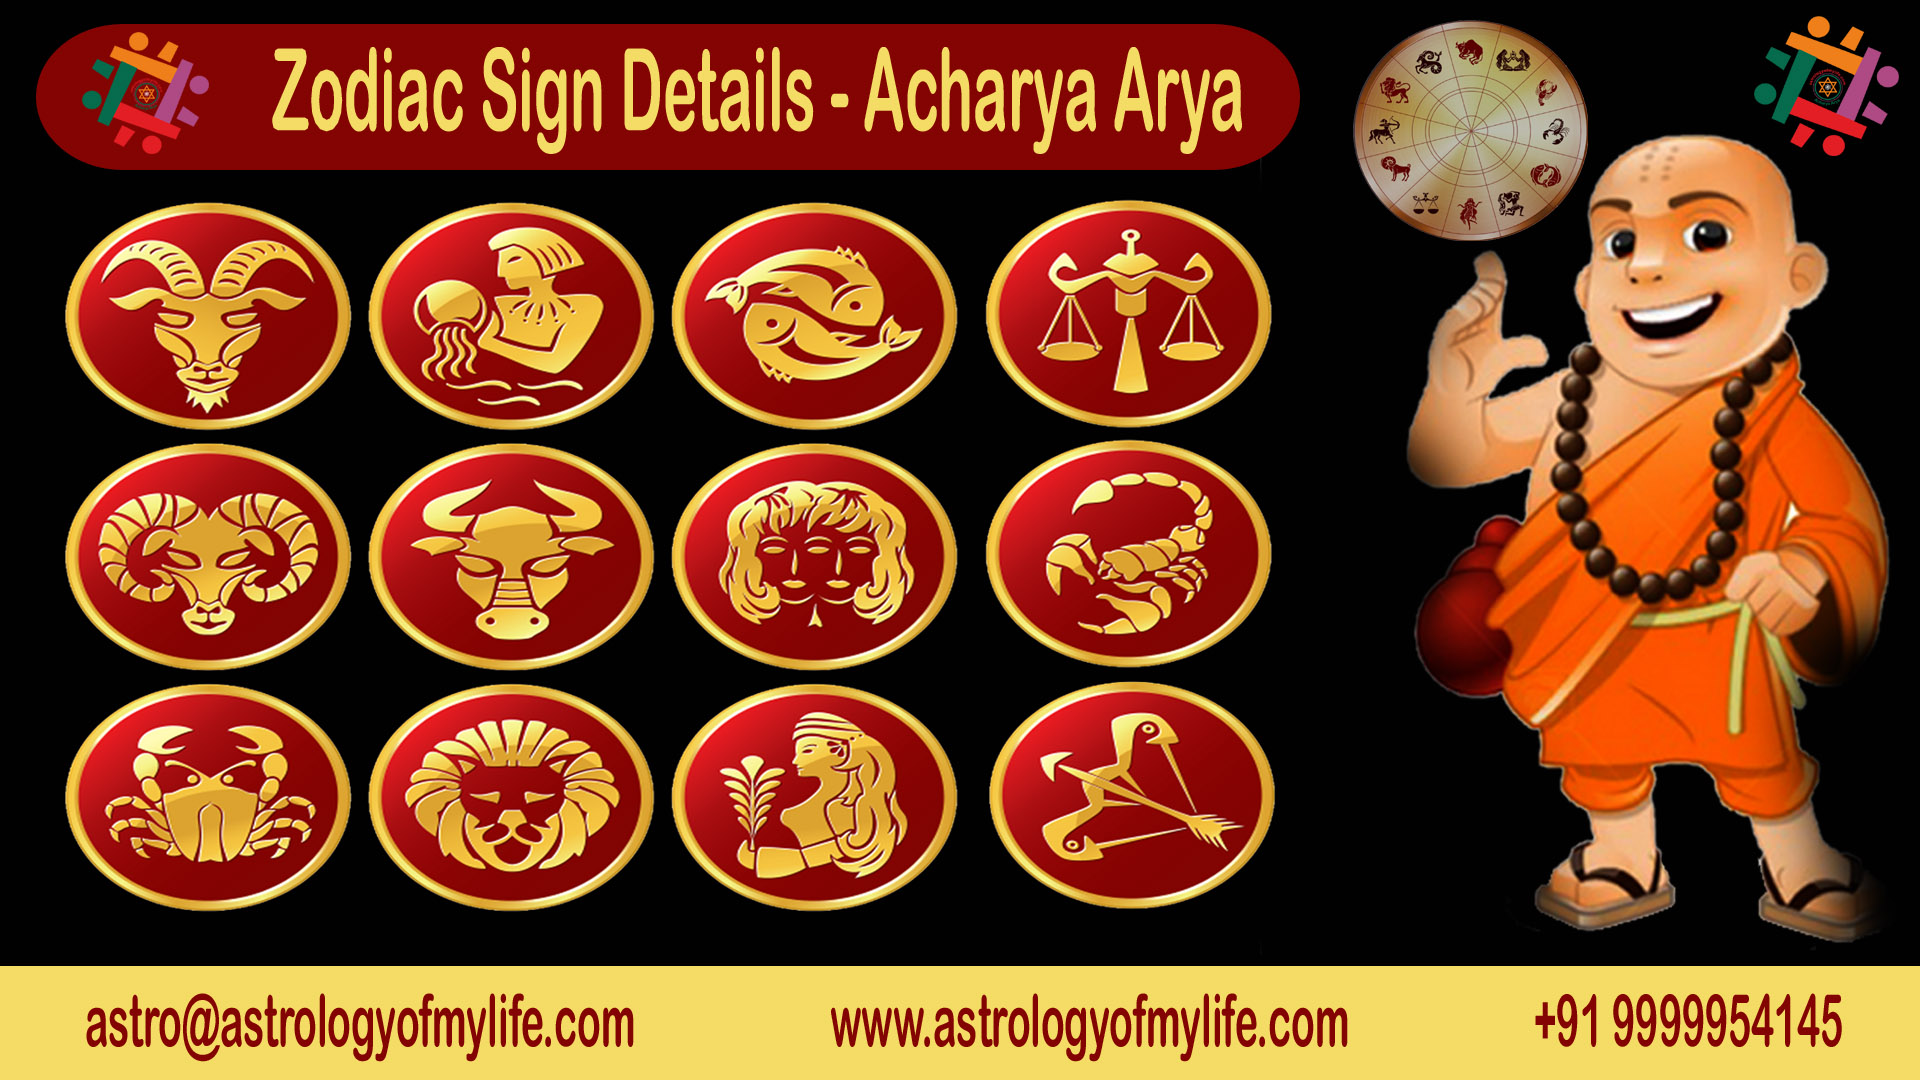 zodiac sign details - acharya arya